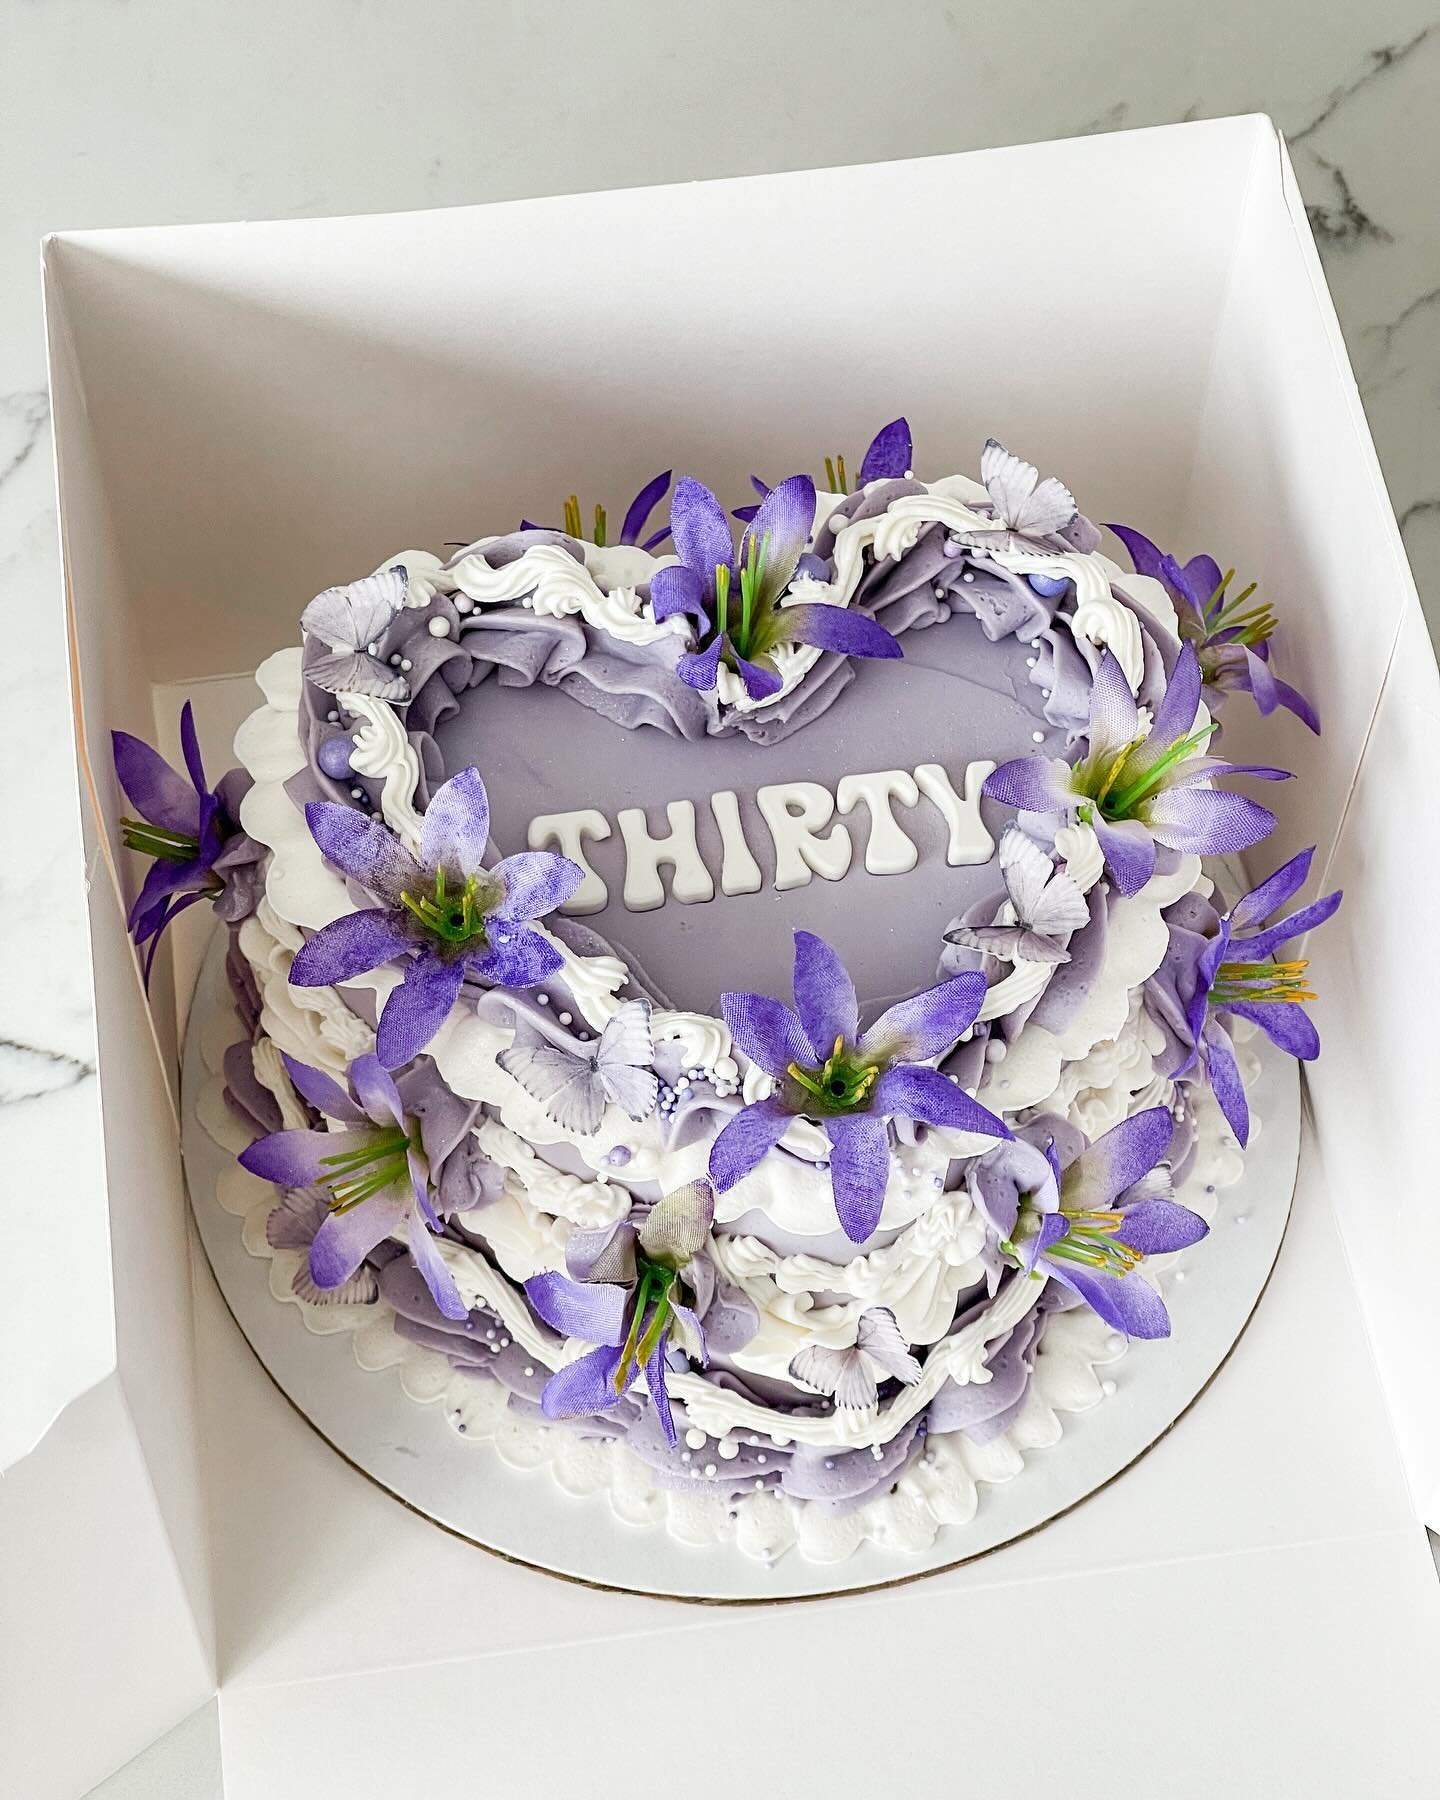 lavender heart cake 🪻💜

6&rdquo; two layer heart cake with lavender &amp; white buttercream, white chocolate letters, faux flowers, sprinkles &amp; edible glitter ✨

#heartcake #purplecake #birthday #baker